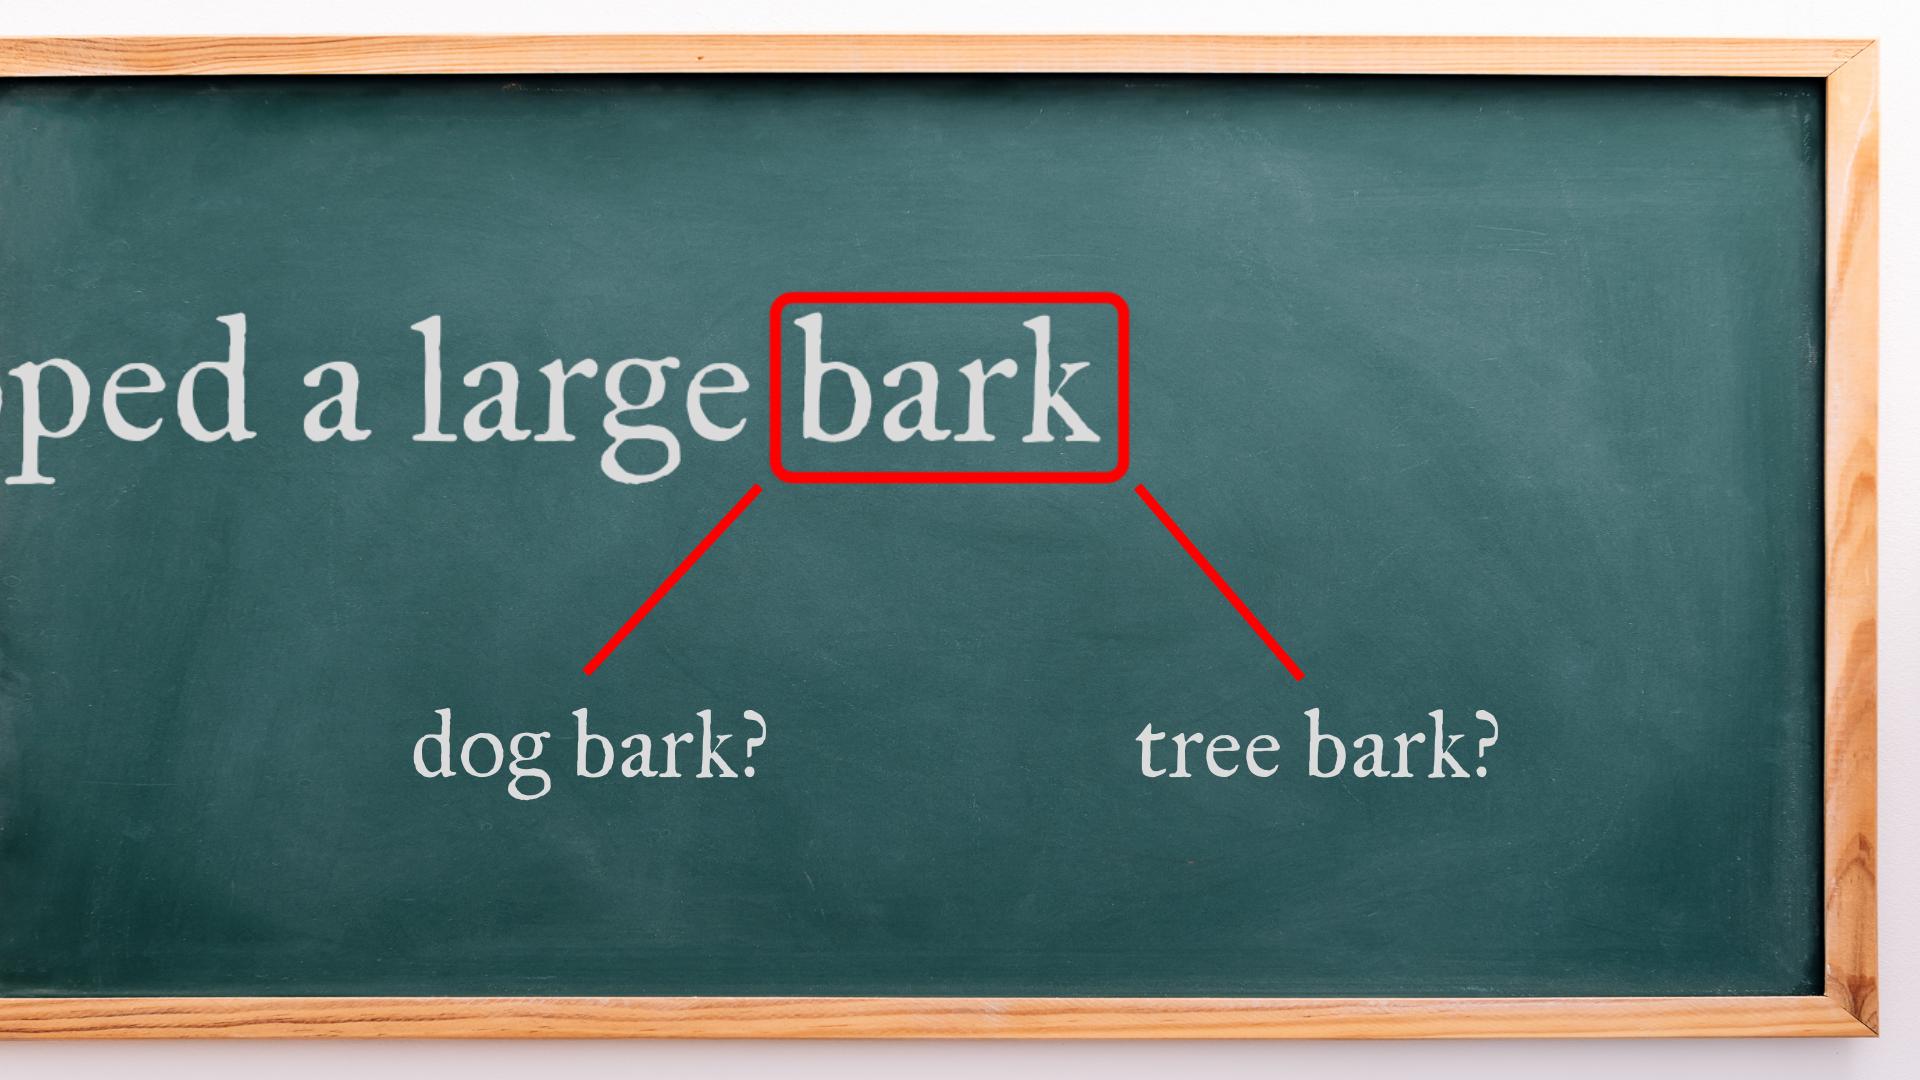 The word "bark" can mean both "dog bark" and "tree bark".